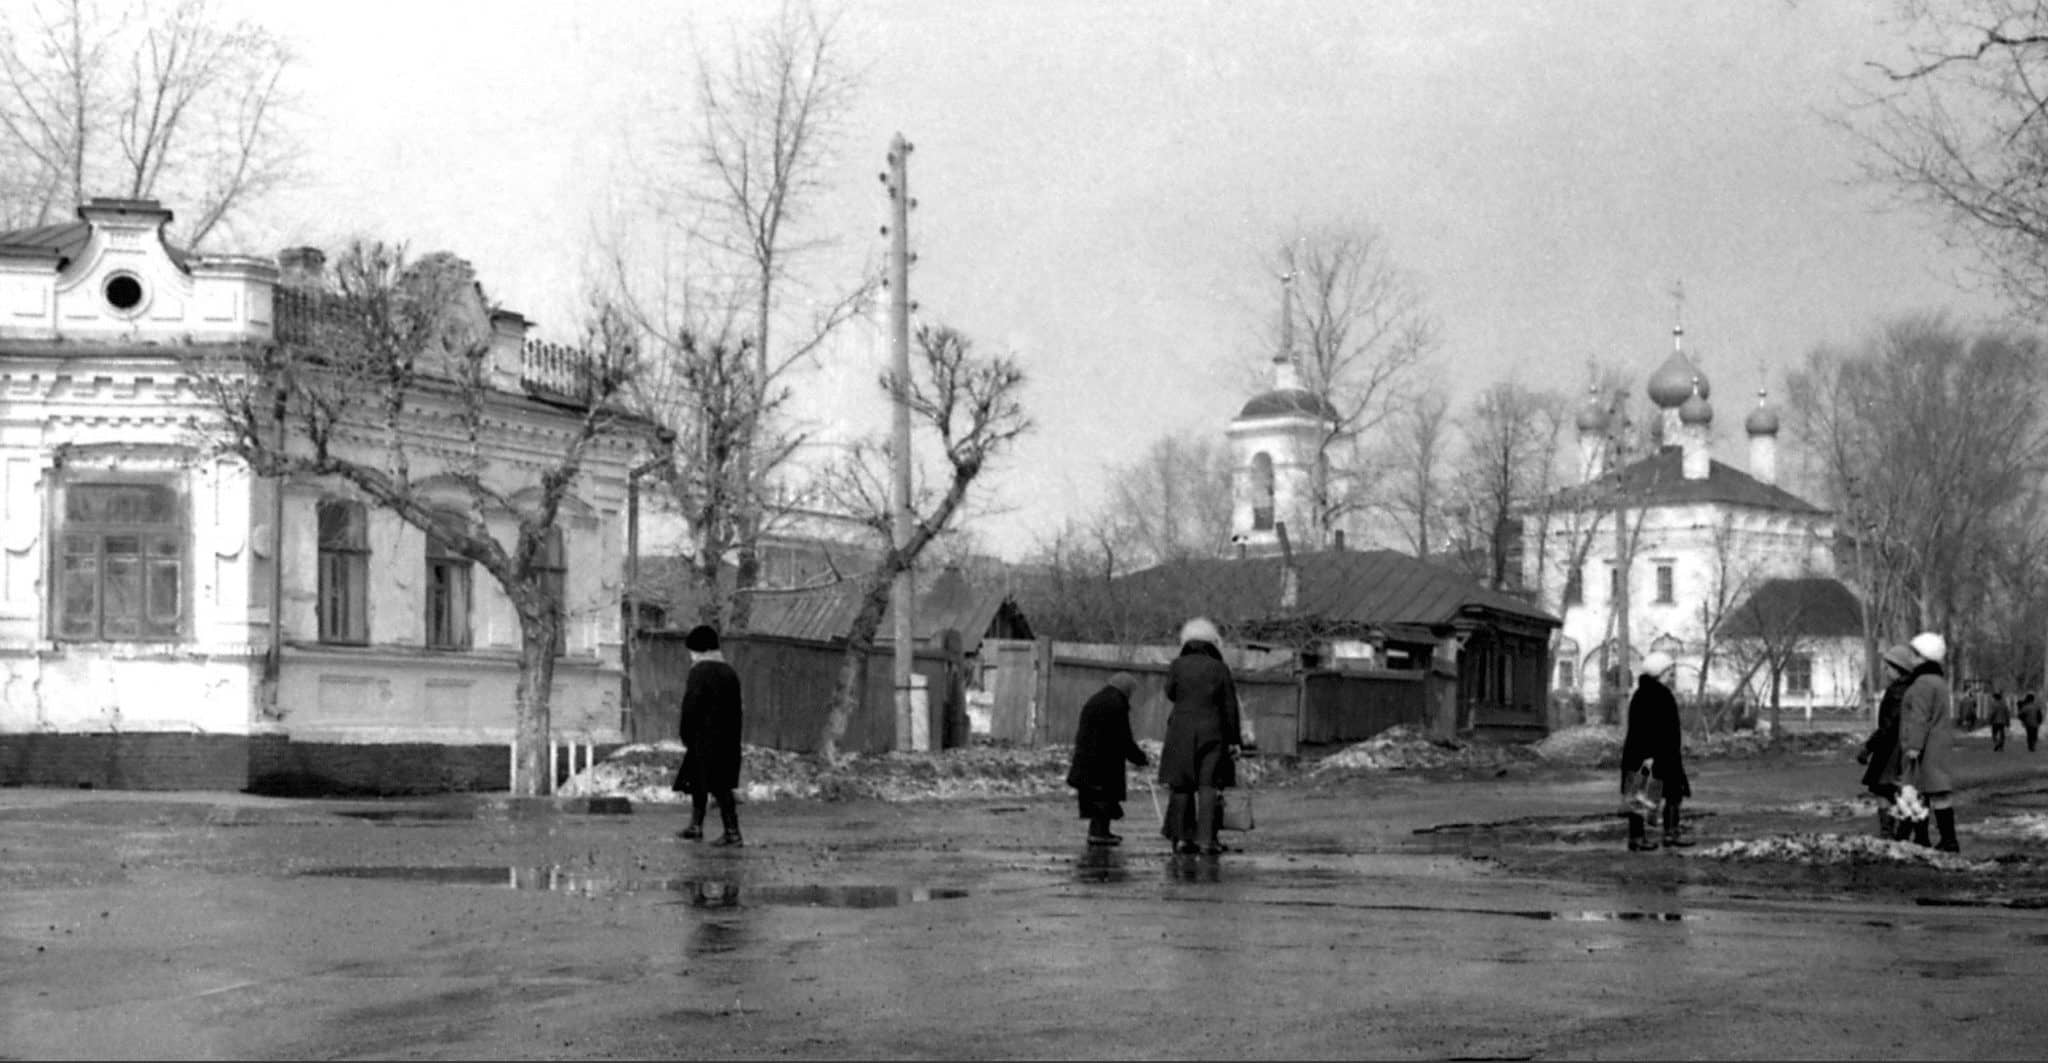 Саранск 1960-х – 1970-х годов. (Фотография Бориса Бахмустова).